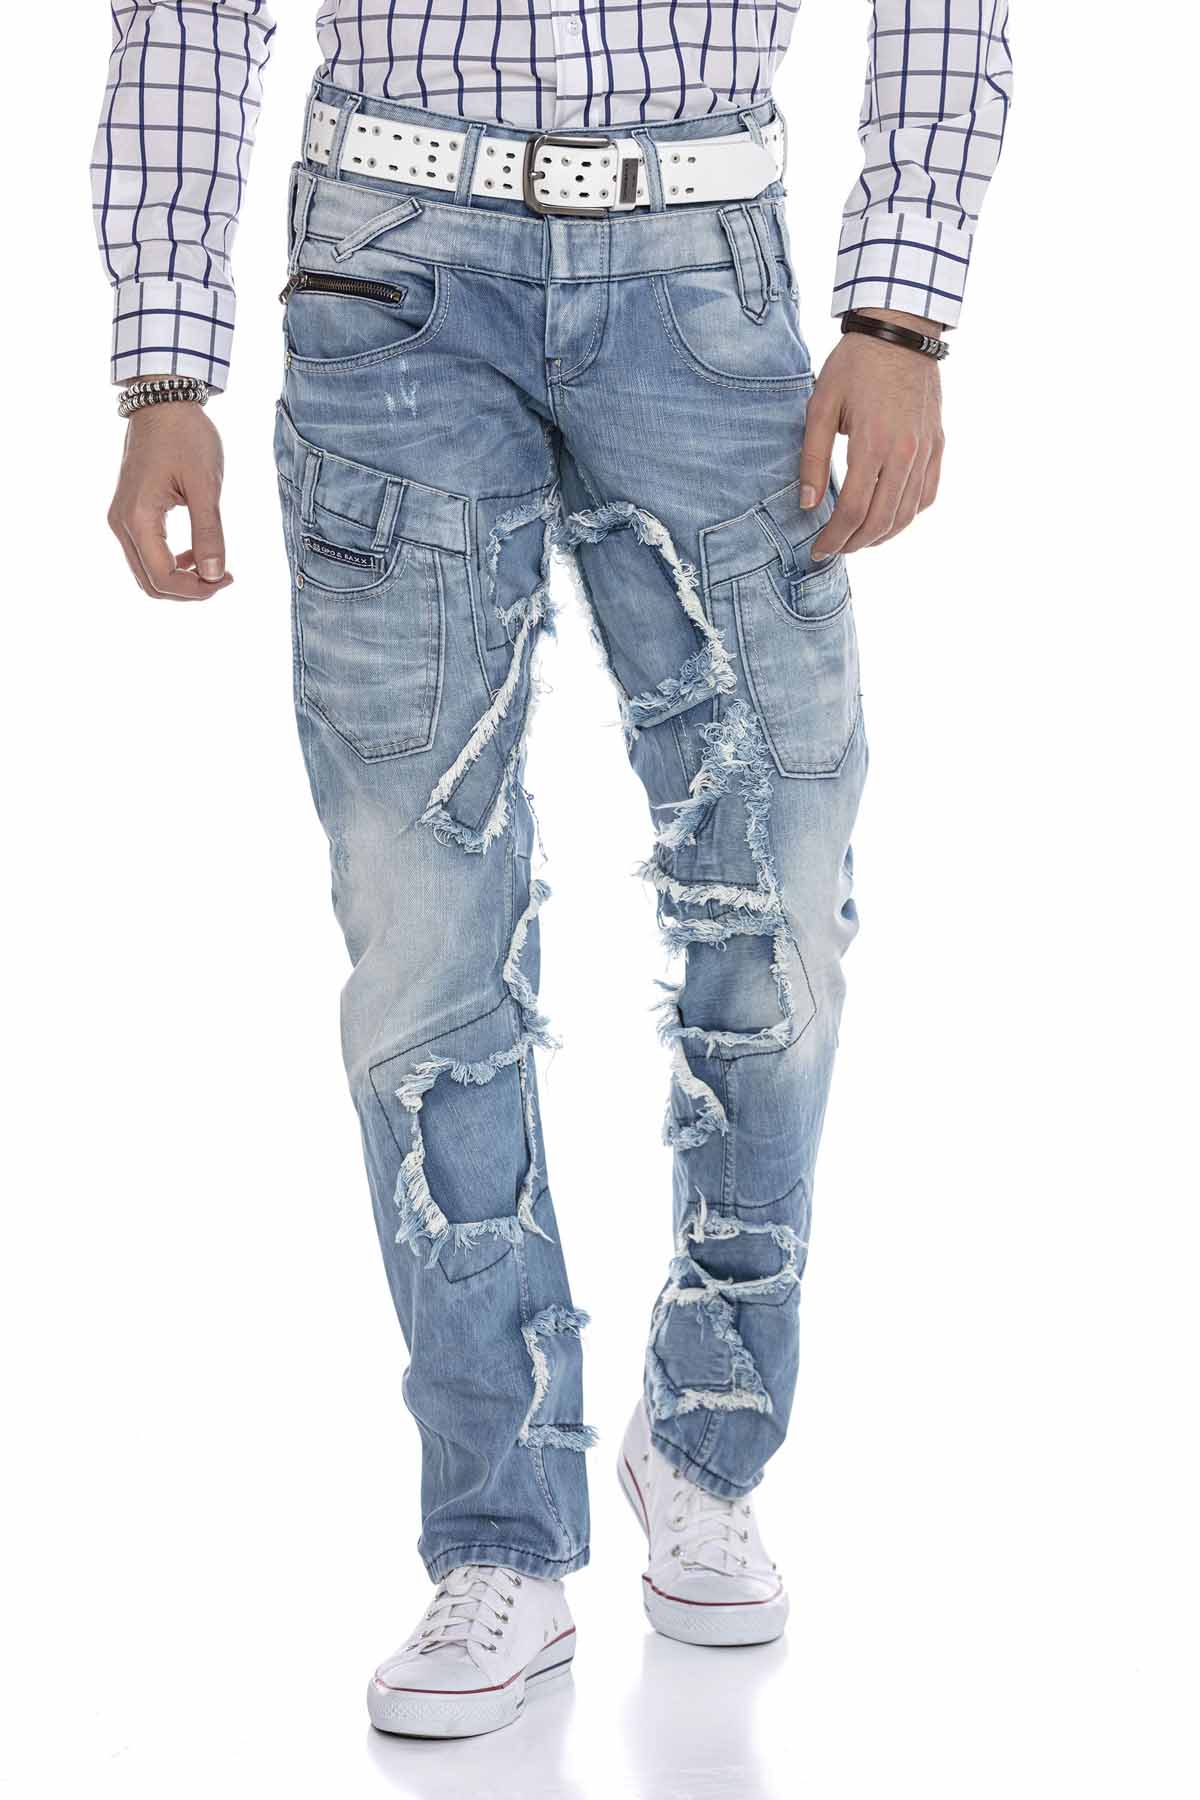 Cipo &amp; Baxx COLLIN men's jeans denim CD617